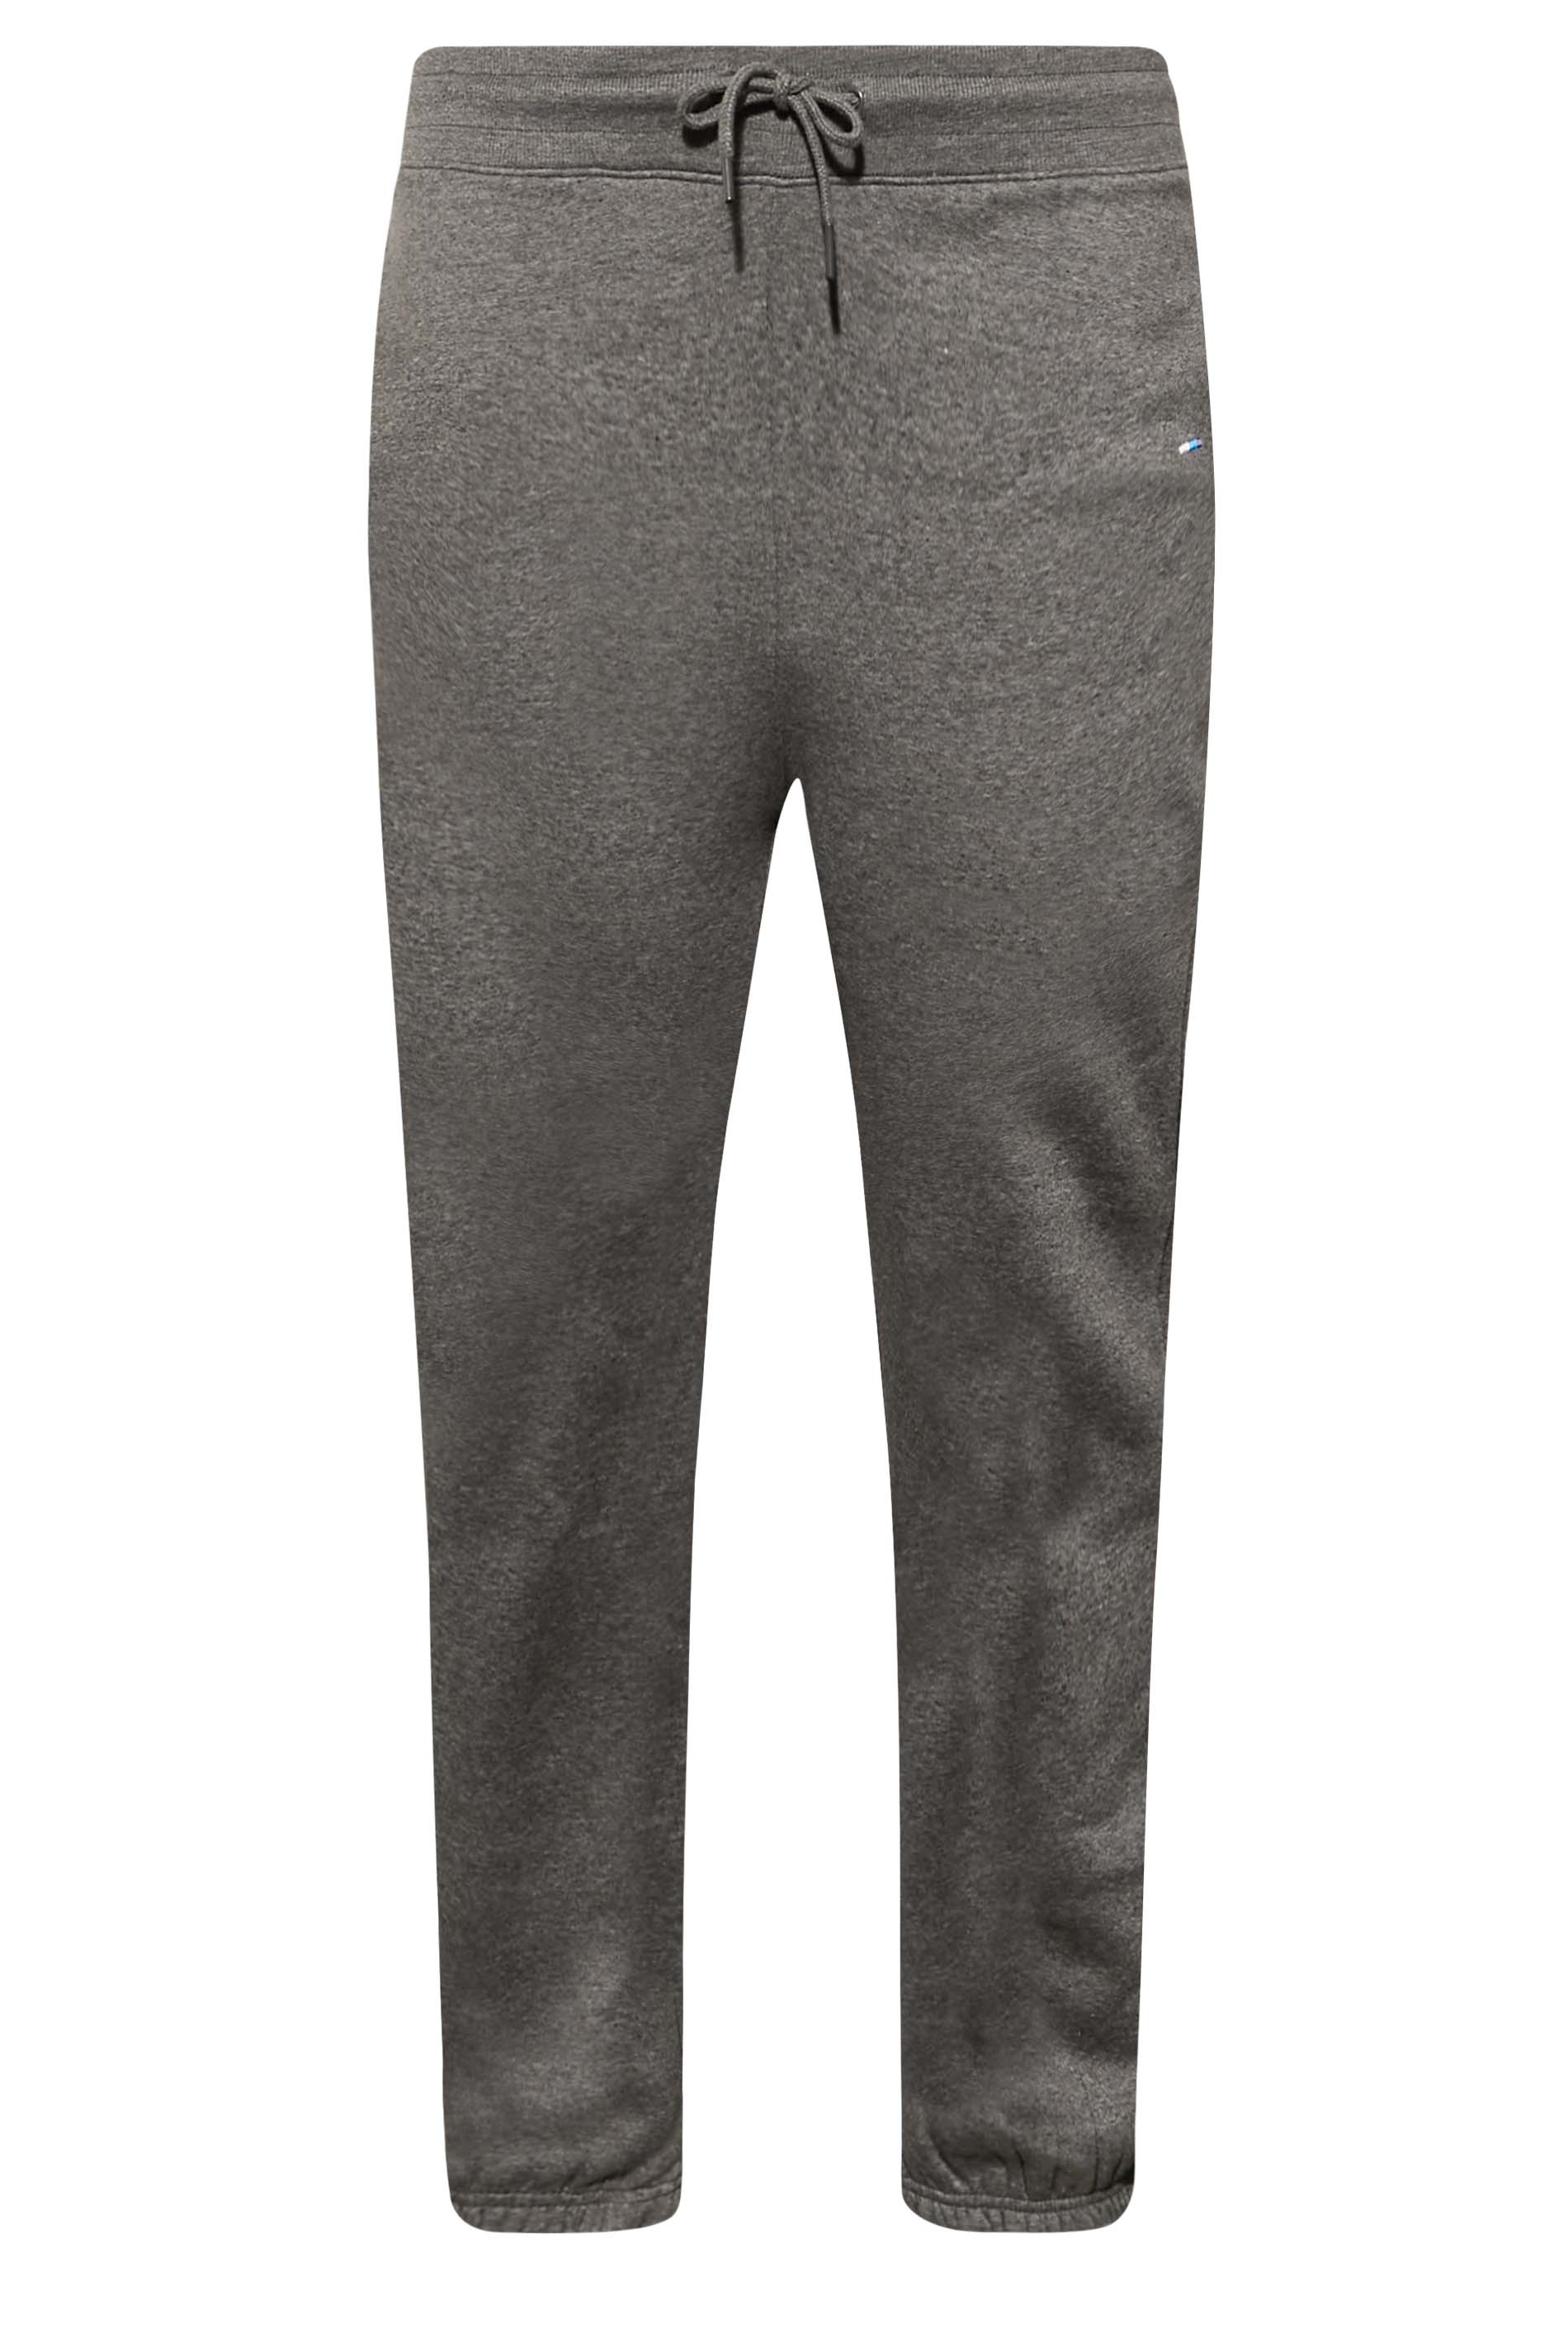 Original Penguin Men's Drawstring Joggers Pants in Castlerock Gray, Size 2XL, Polyester/Spandex